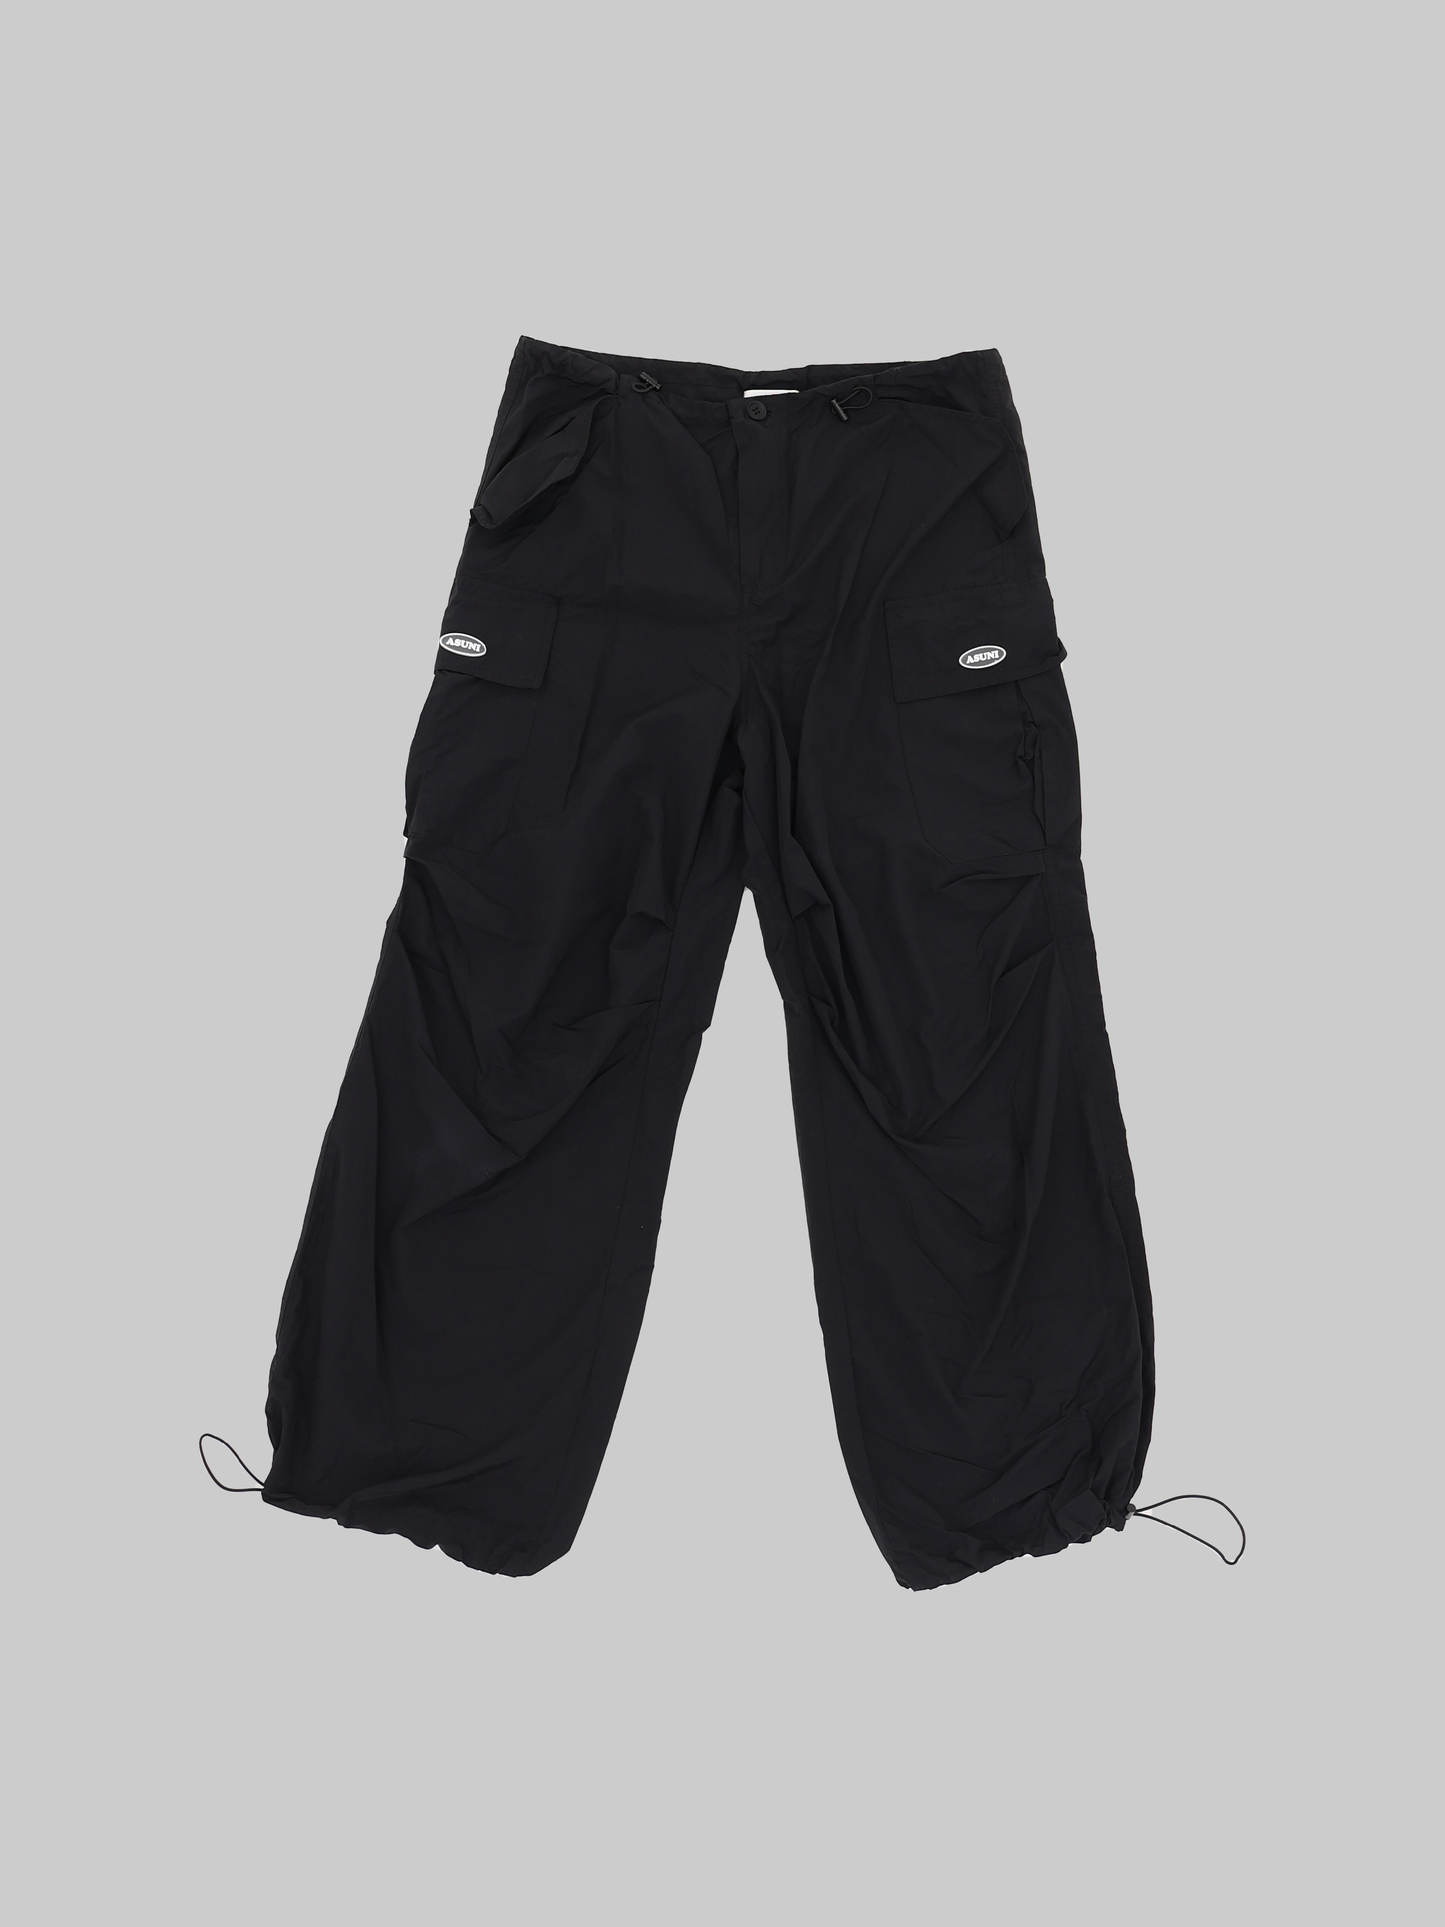 asuni Workwear Wide-Leg Cargo Pants (Black)